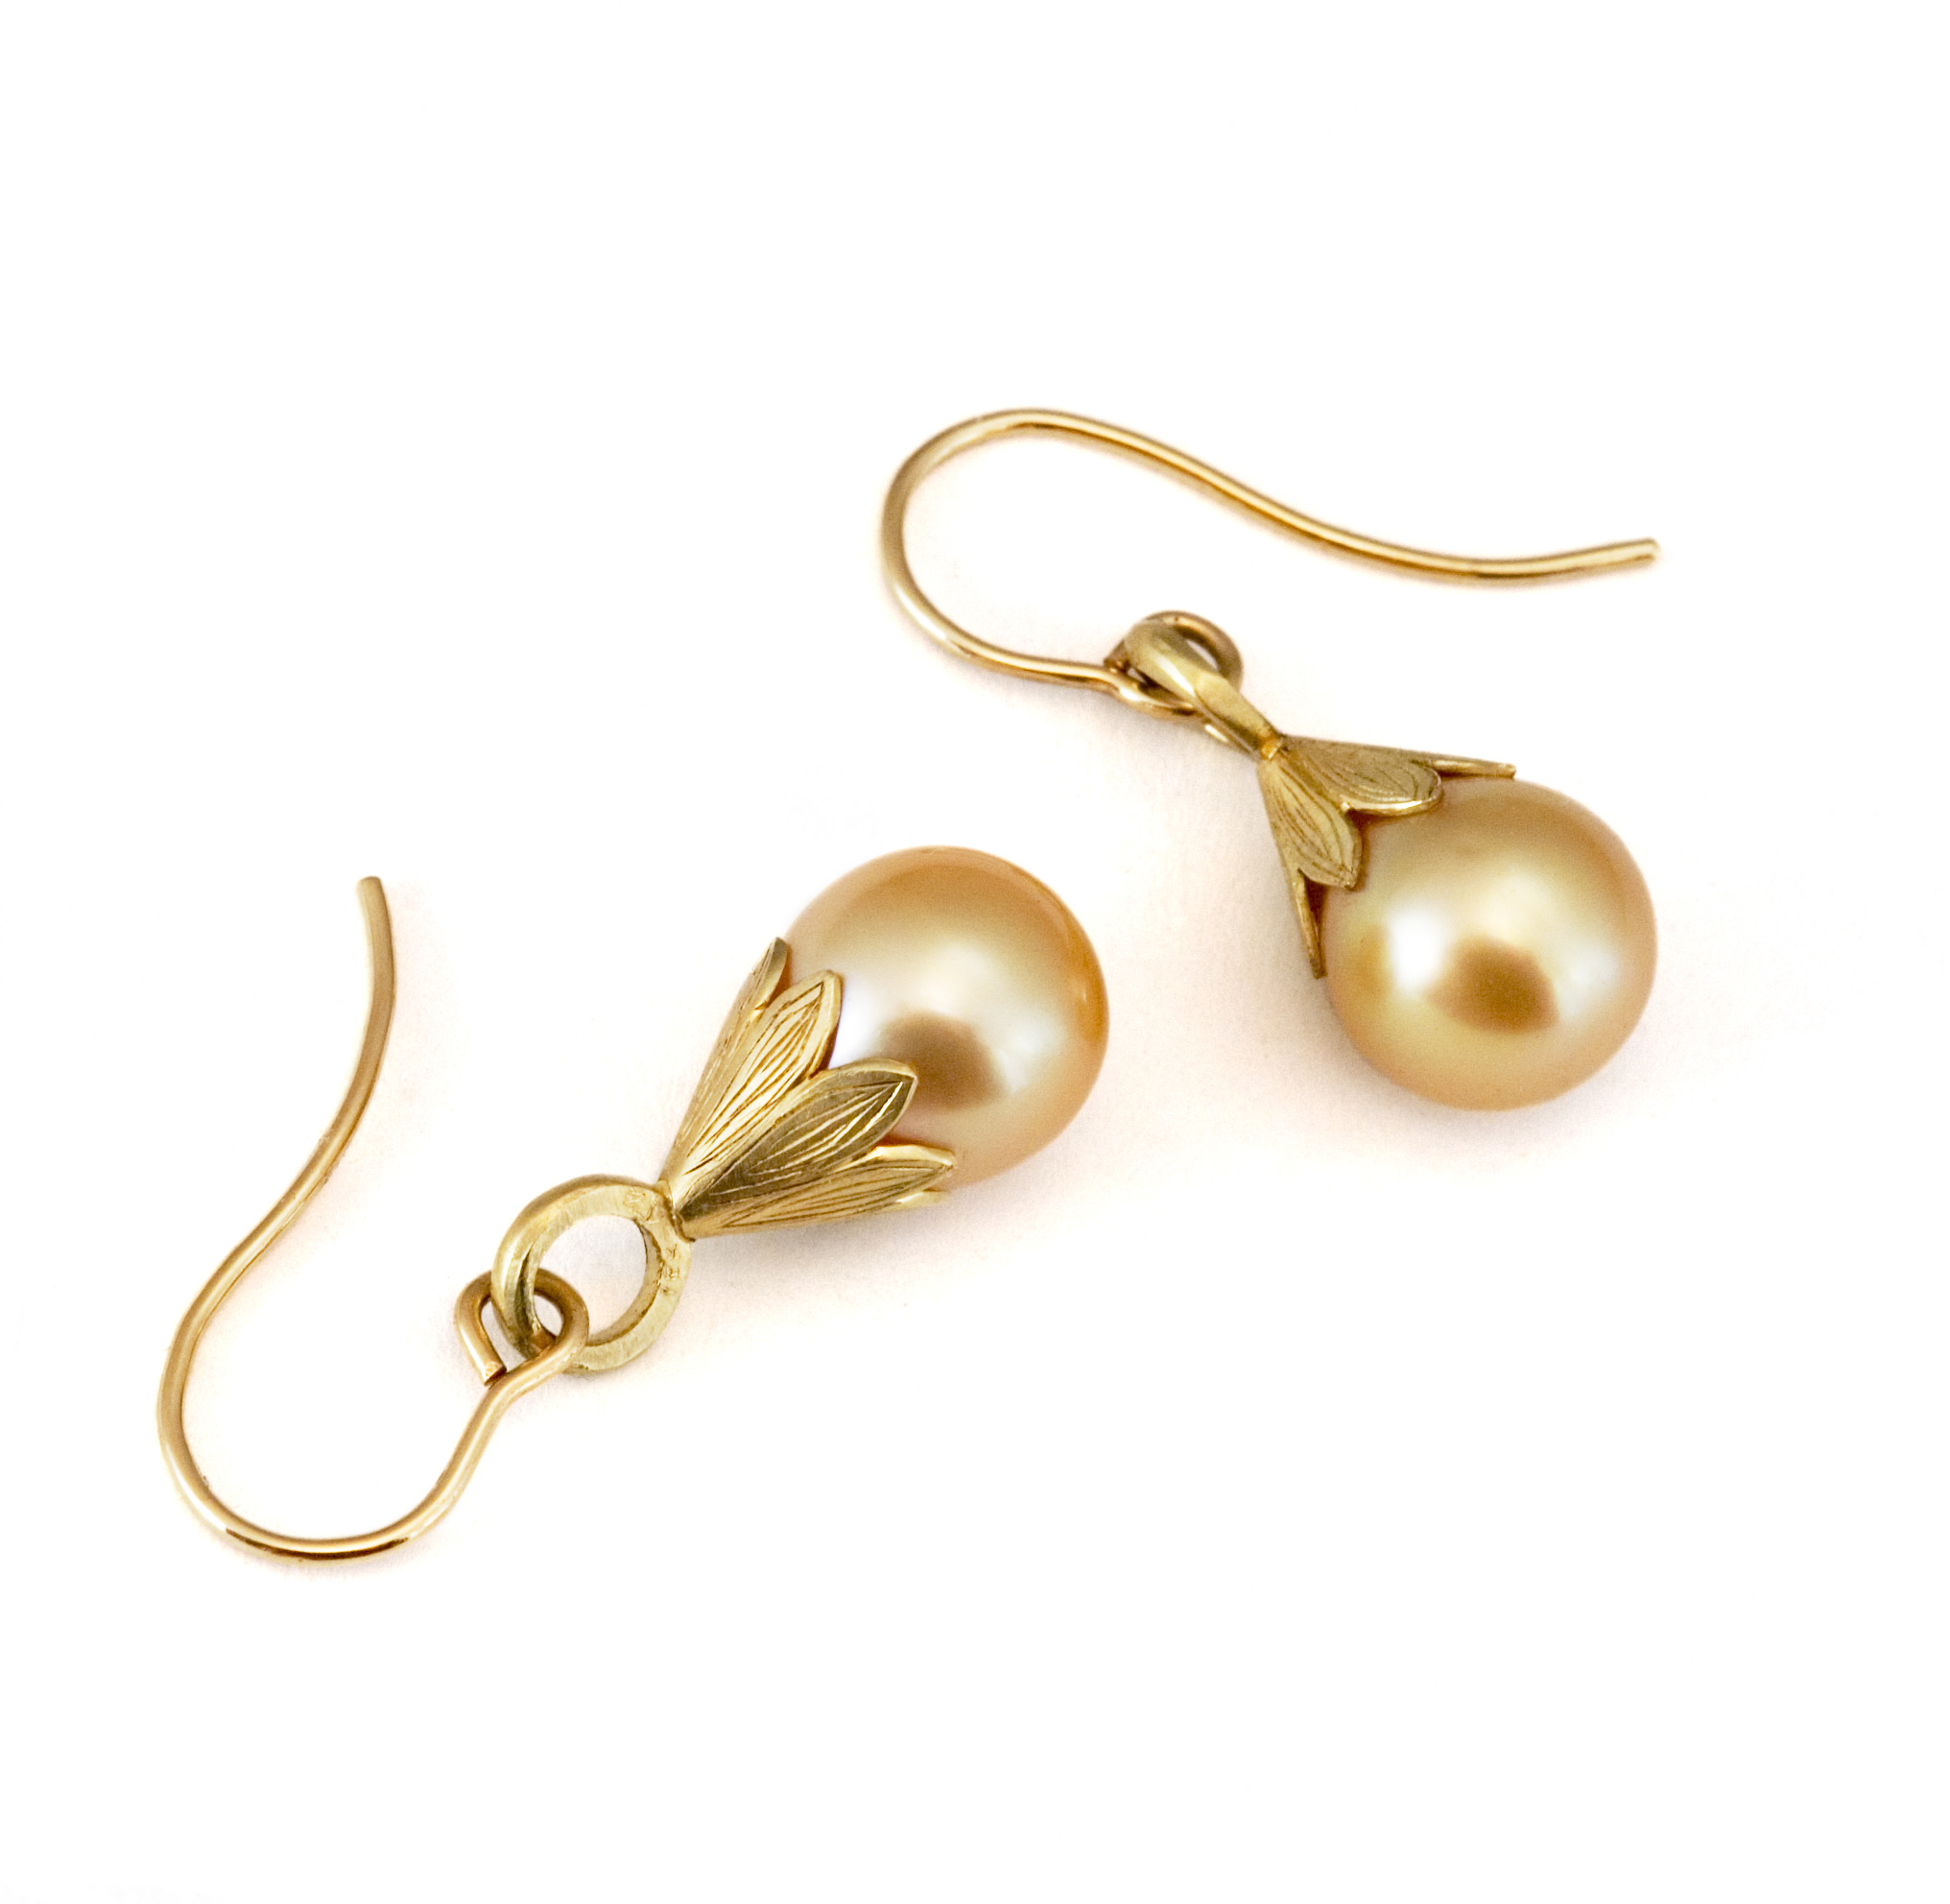 Golden South Sea Pearl Drop Earrings in 18k gold by Tamberlaine